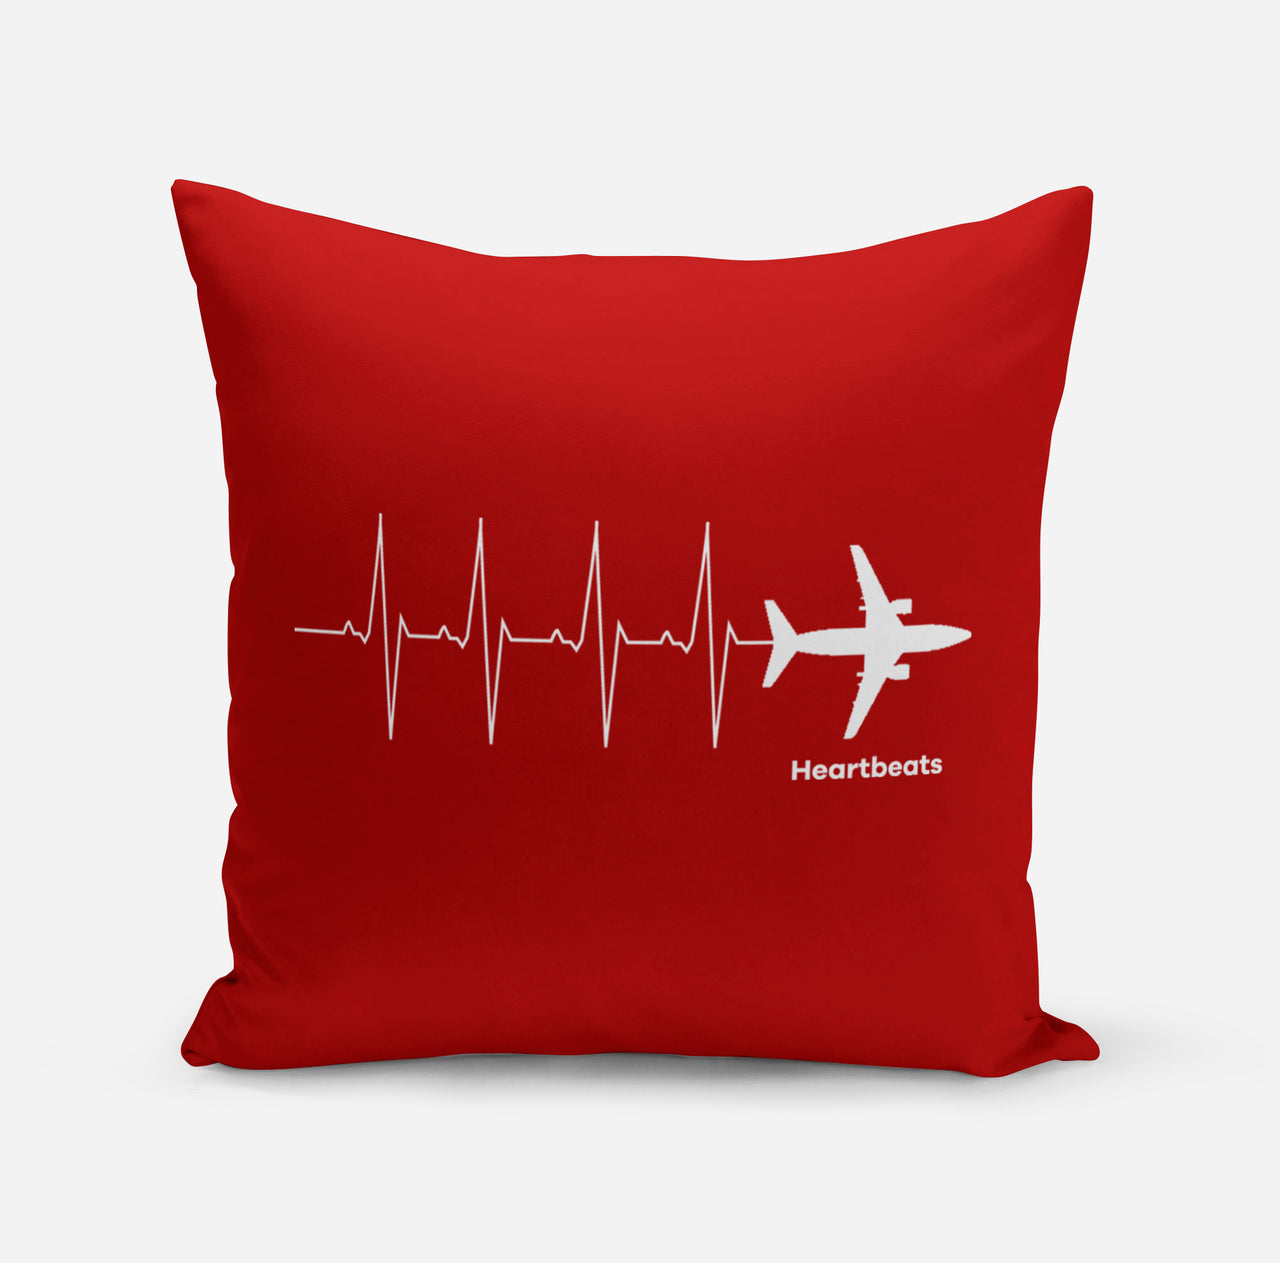 Aviation Heartbeats Designed Pillows